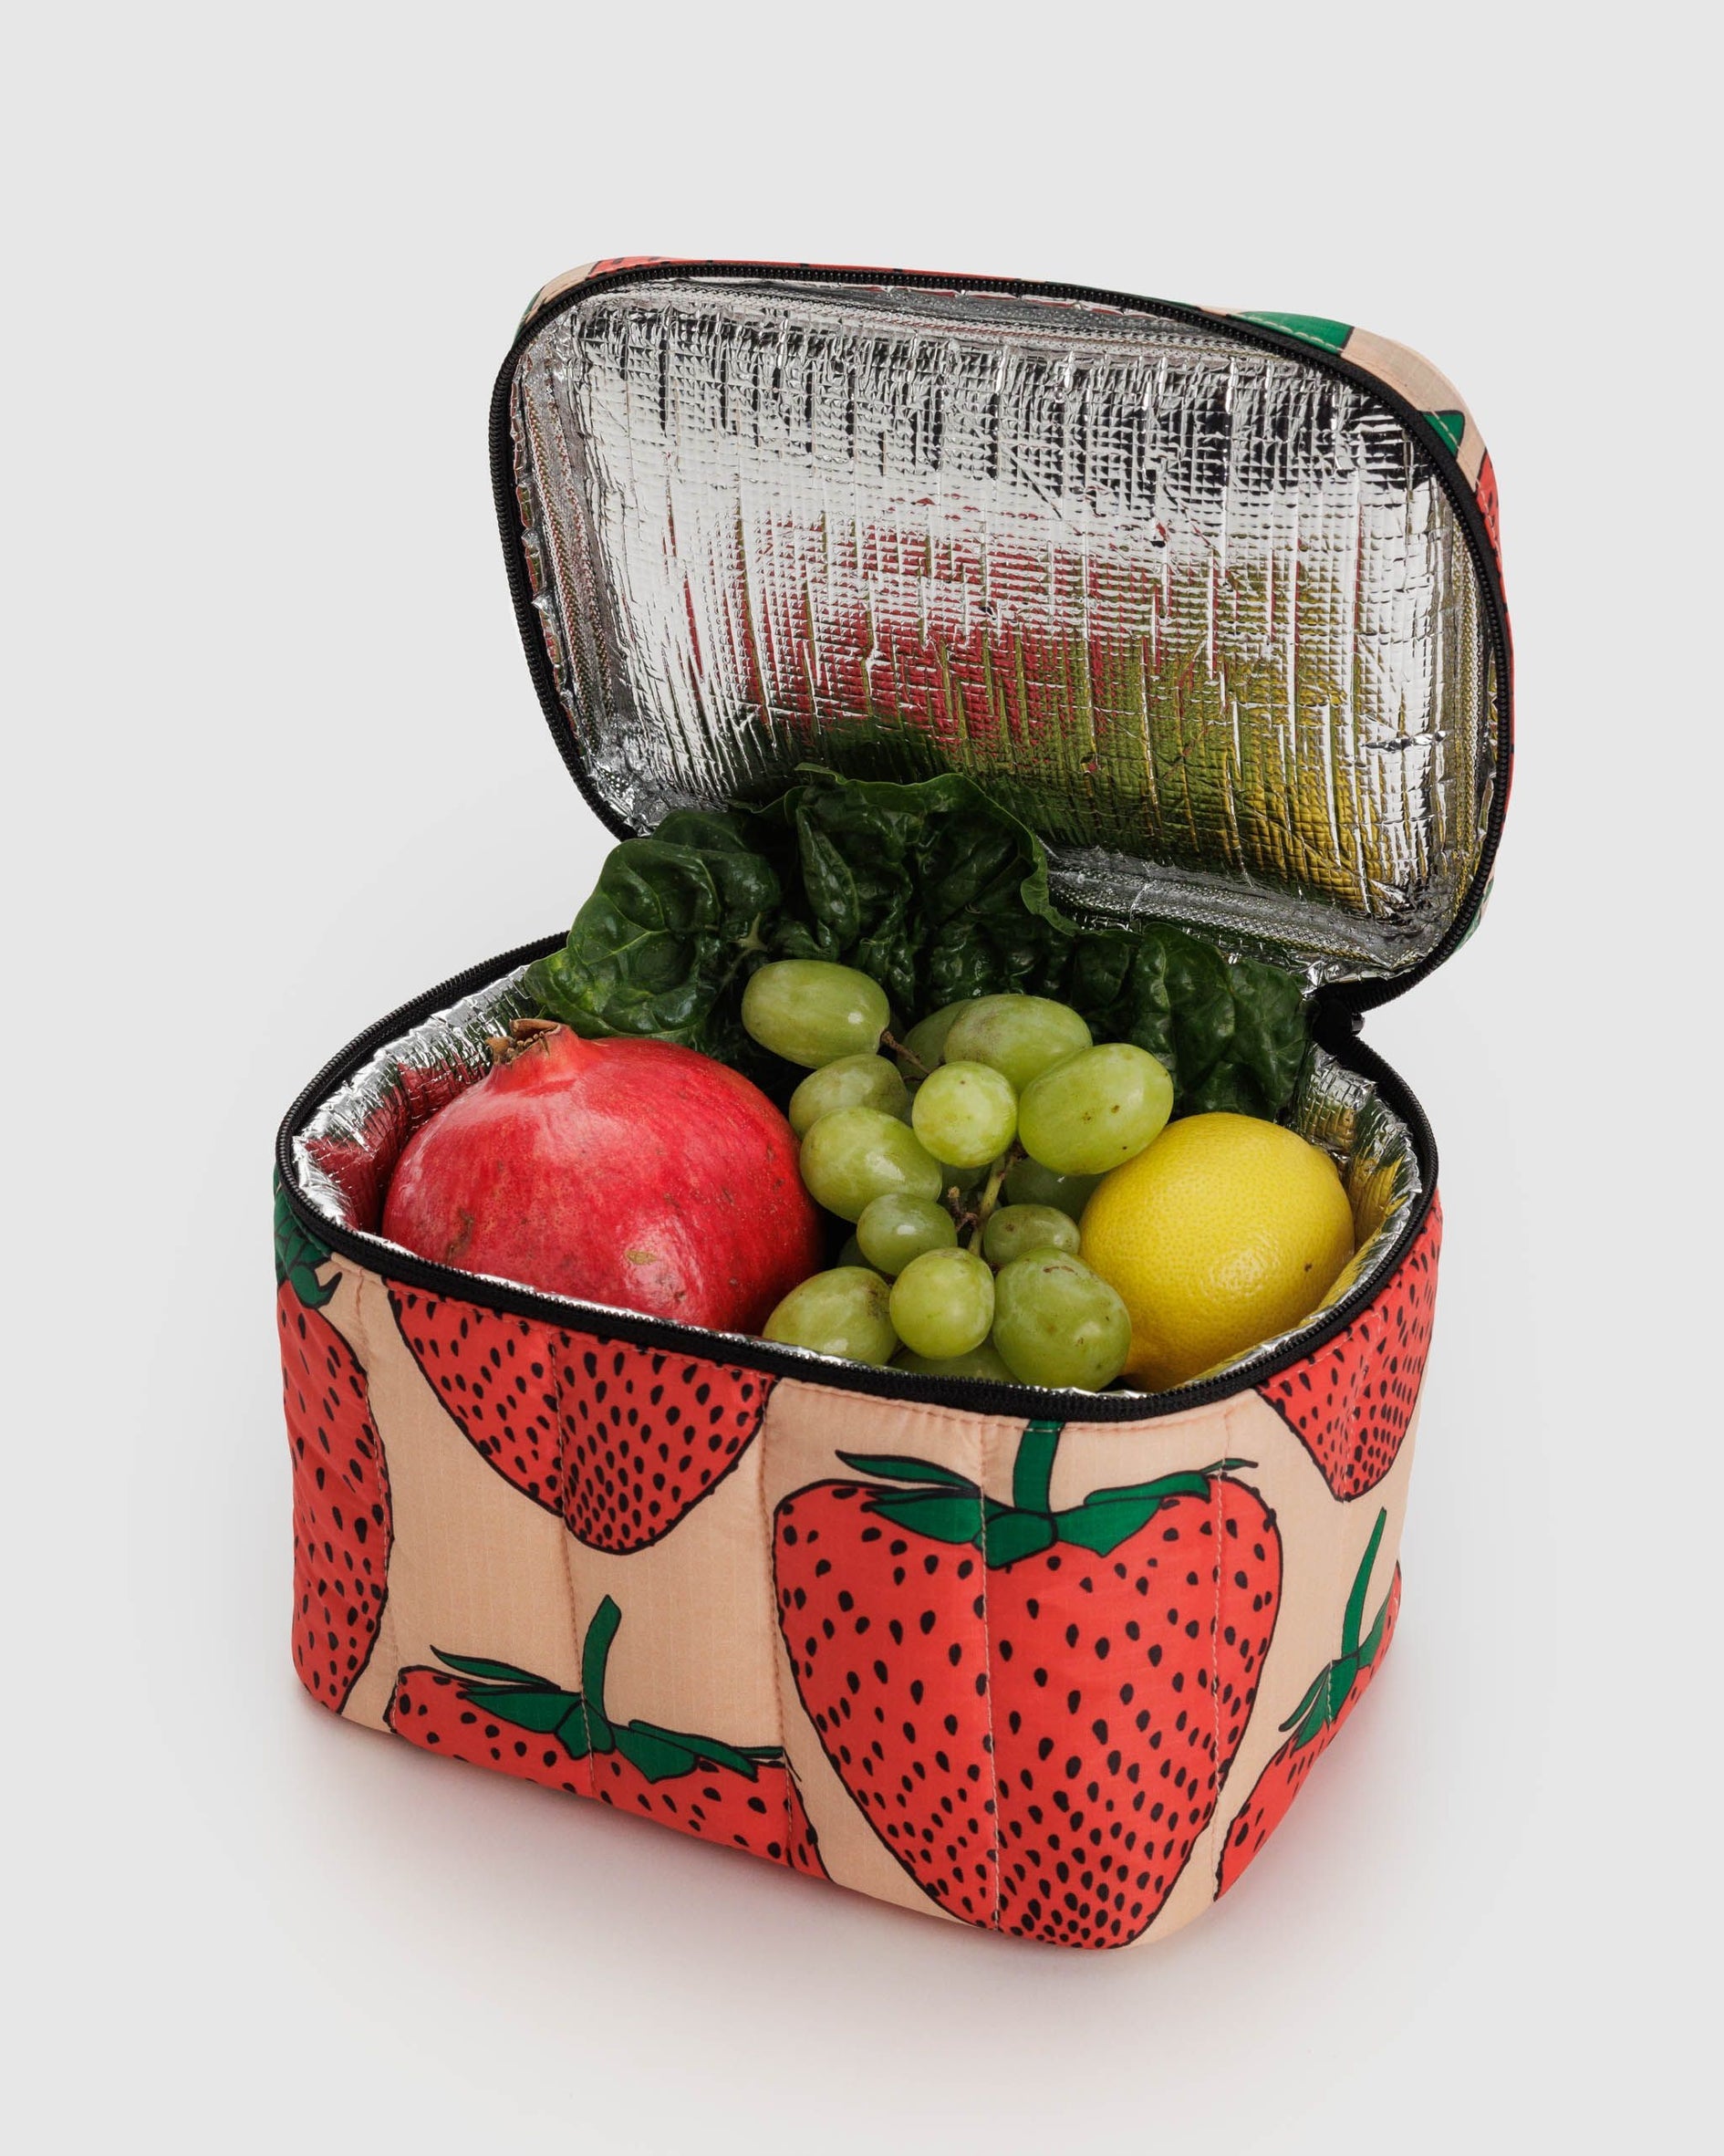 Puffy Lunch Bag, Strawberry